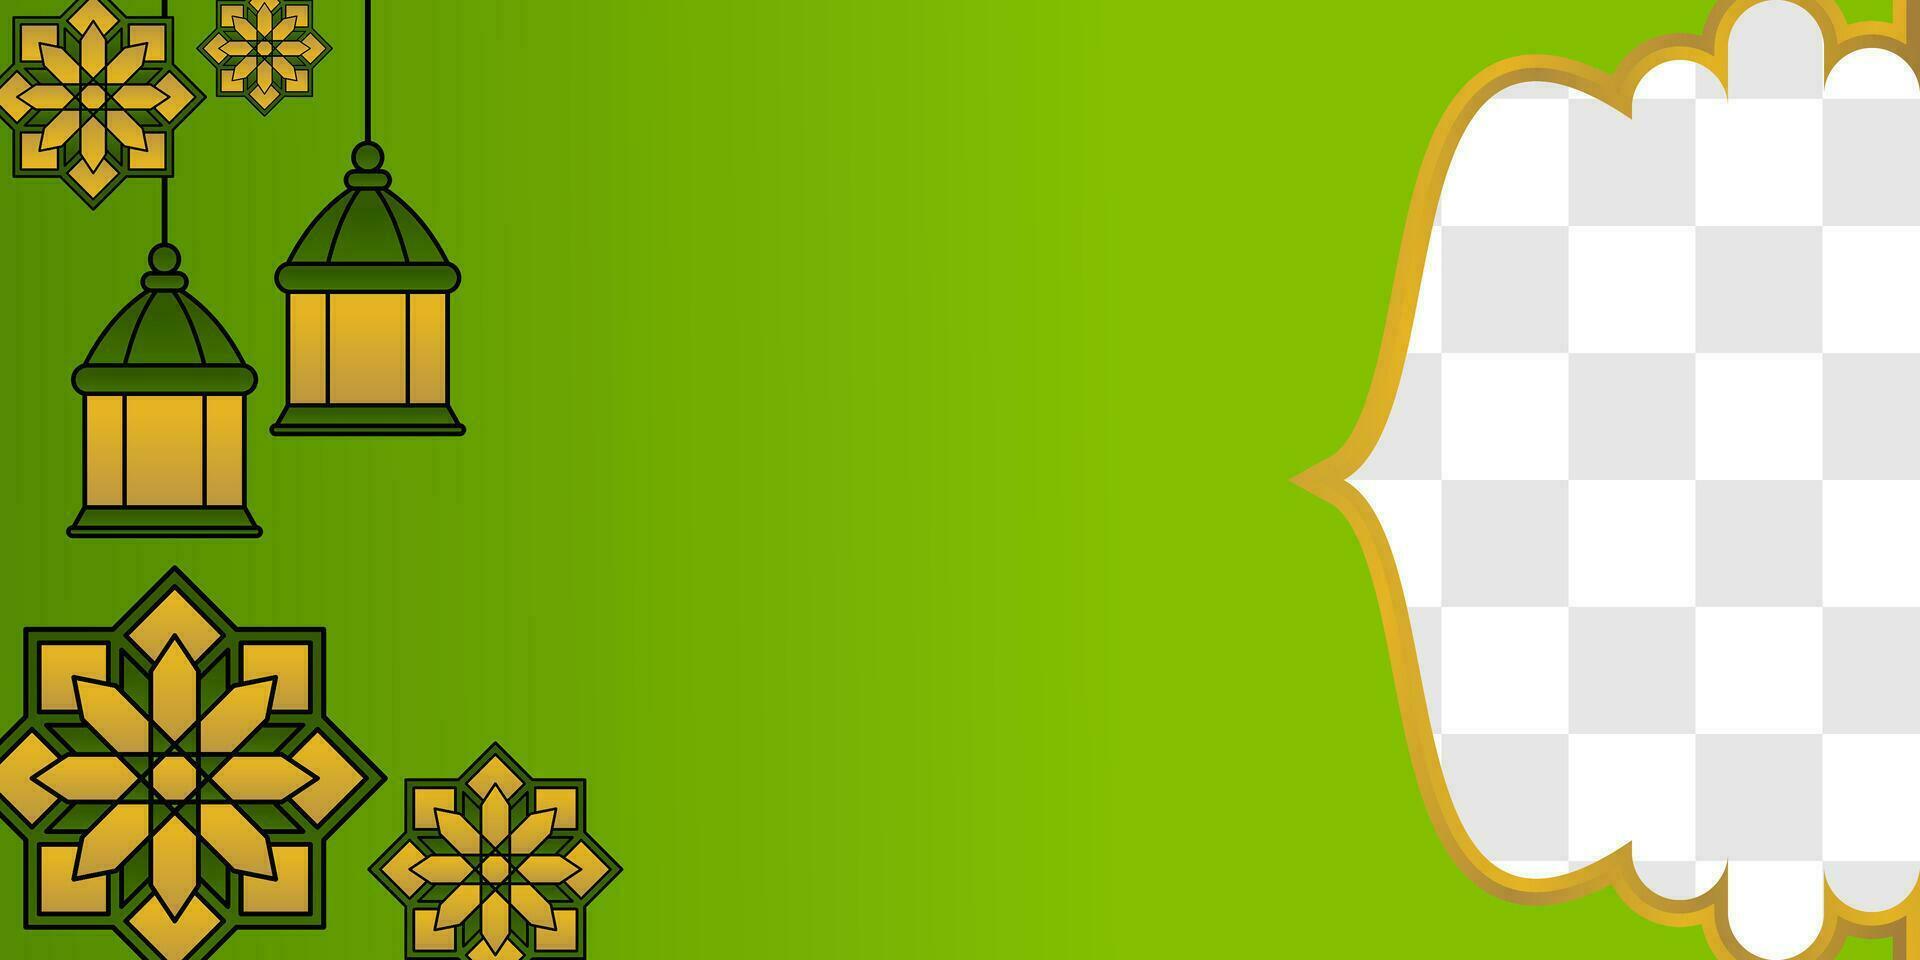 Green Islamic background, with lantern and mandala ornaments. free copy space area. vector template for banner, greeting card for Islamic holidays, eid al-fitr, ramadan, eid al-adha